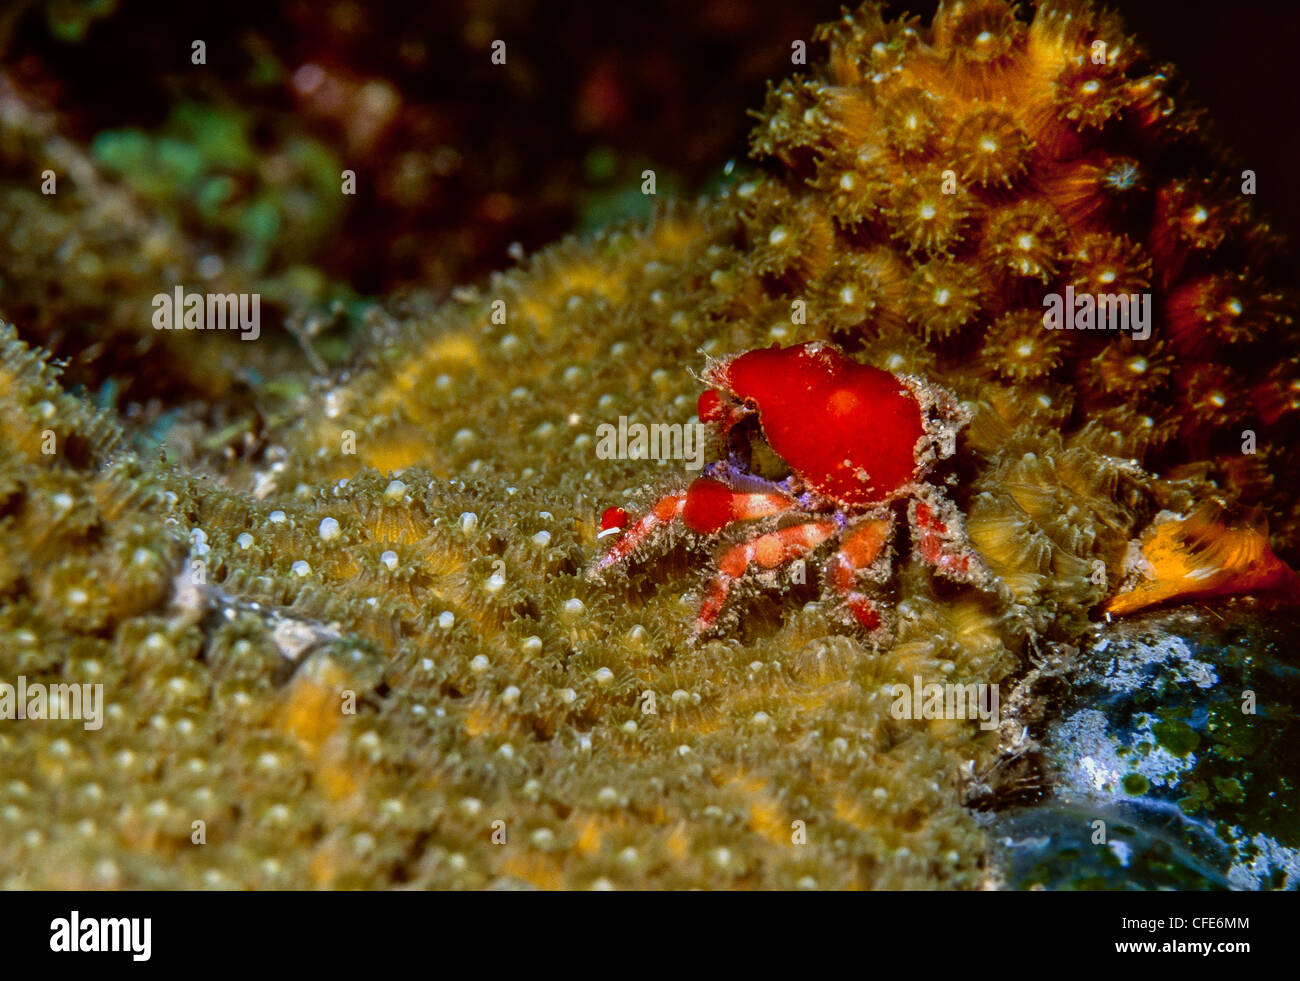 Cryptic teardrop crab Pelia mutica Stock Photo